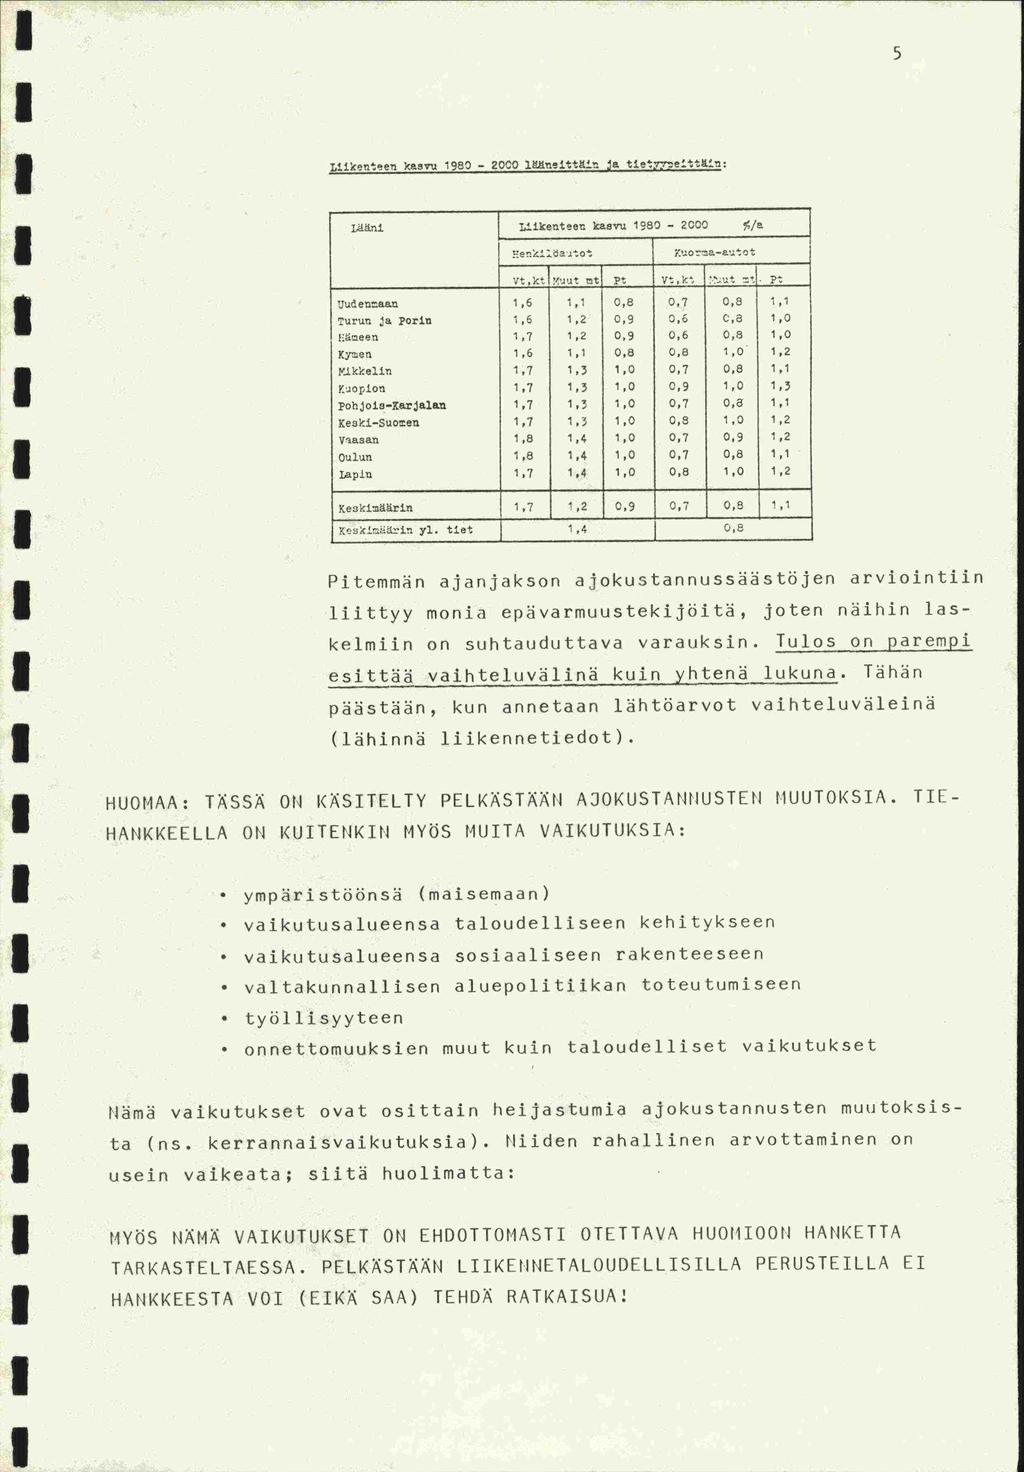 I i: Liikenteen kasvu 1980-2000 l8uneittln ja tiet77pelttin: Uthxii Liikenteen kasvu 1980-2000 /a iei1datot uoe.-autot Vt,ktl1'jut nt Pt Vt,k 1..ut t.